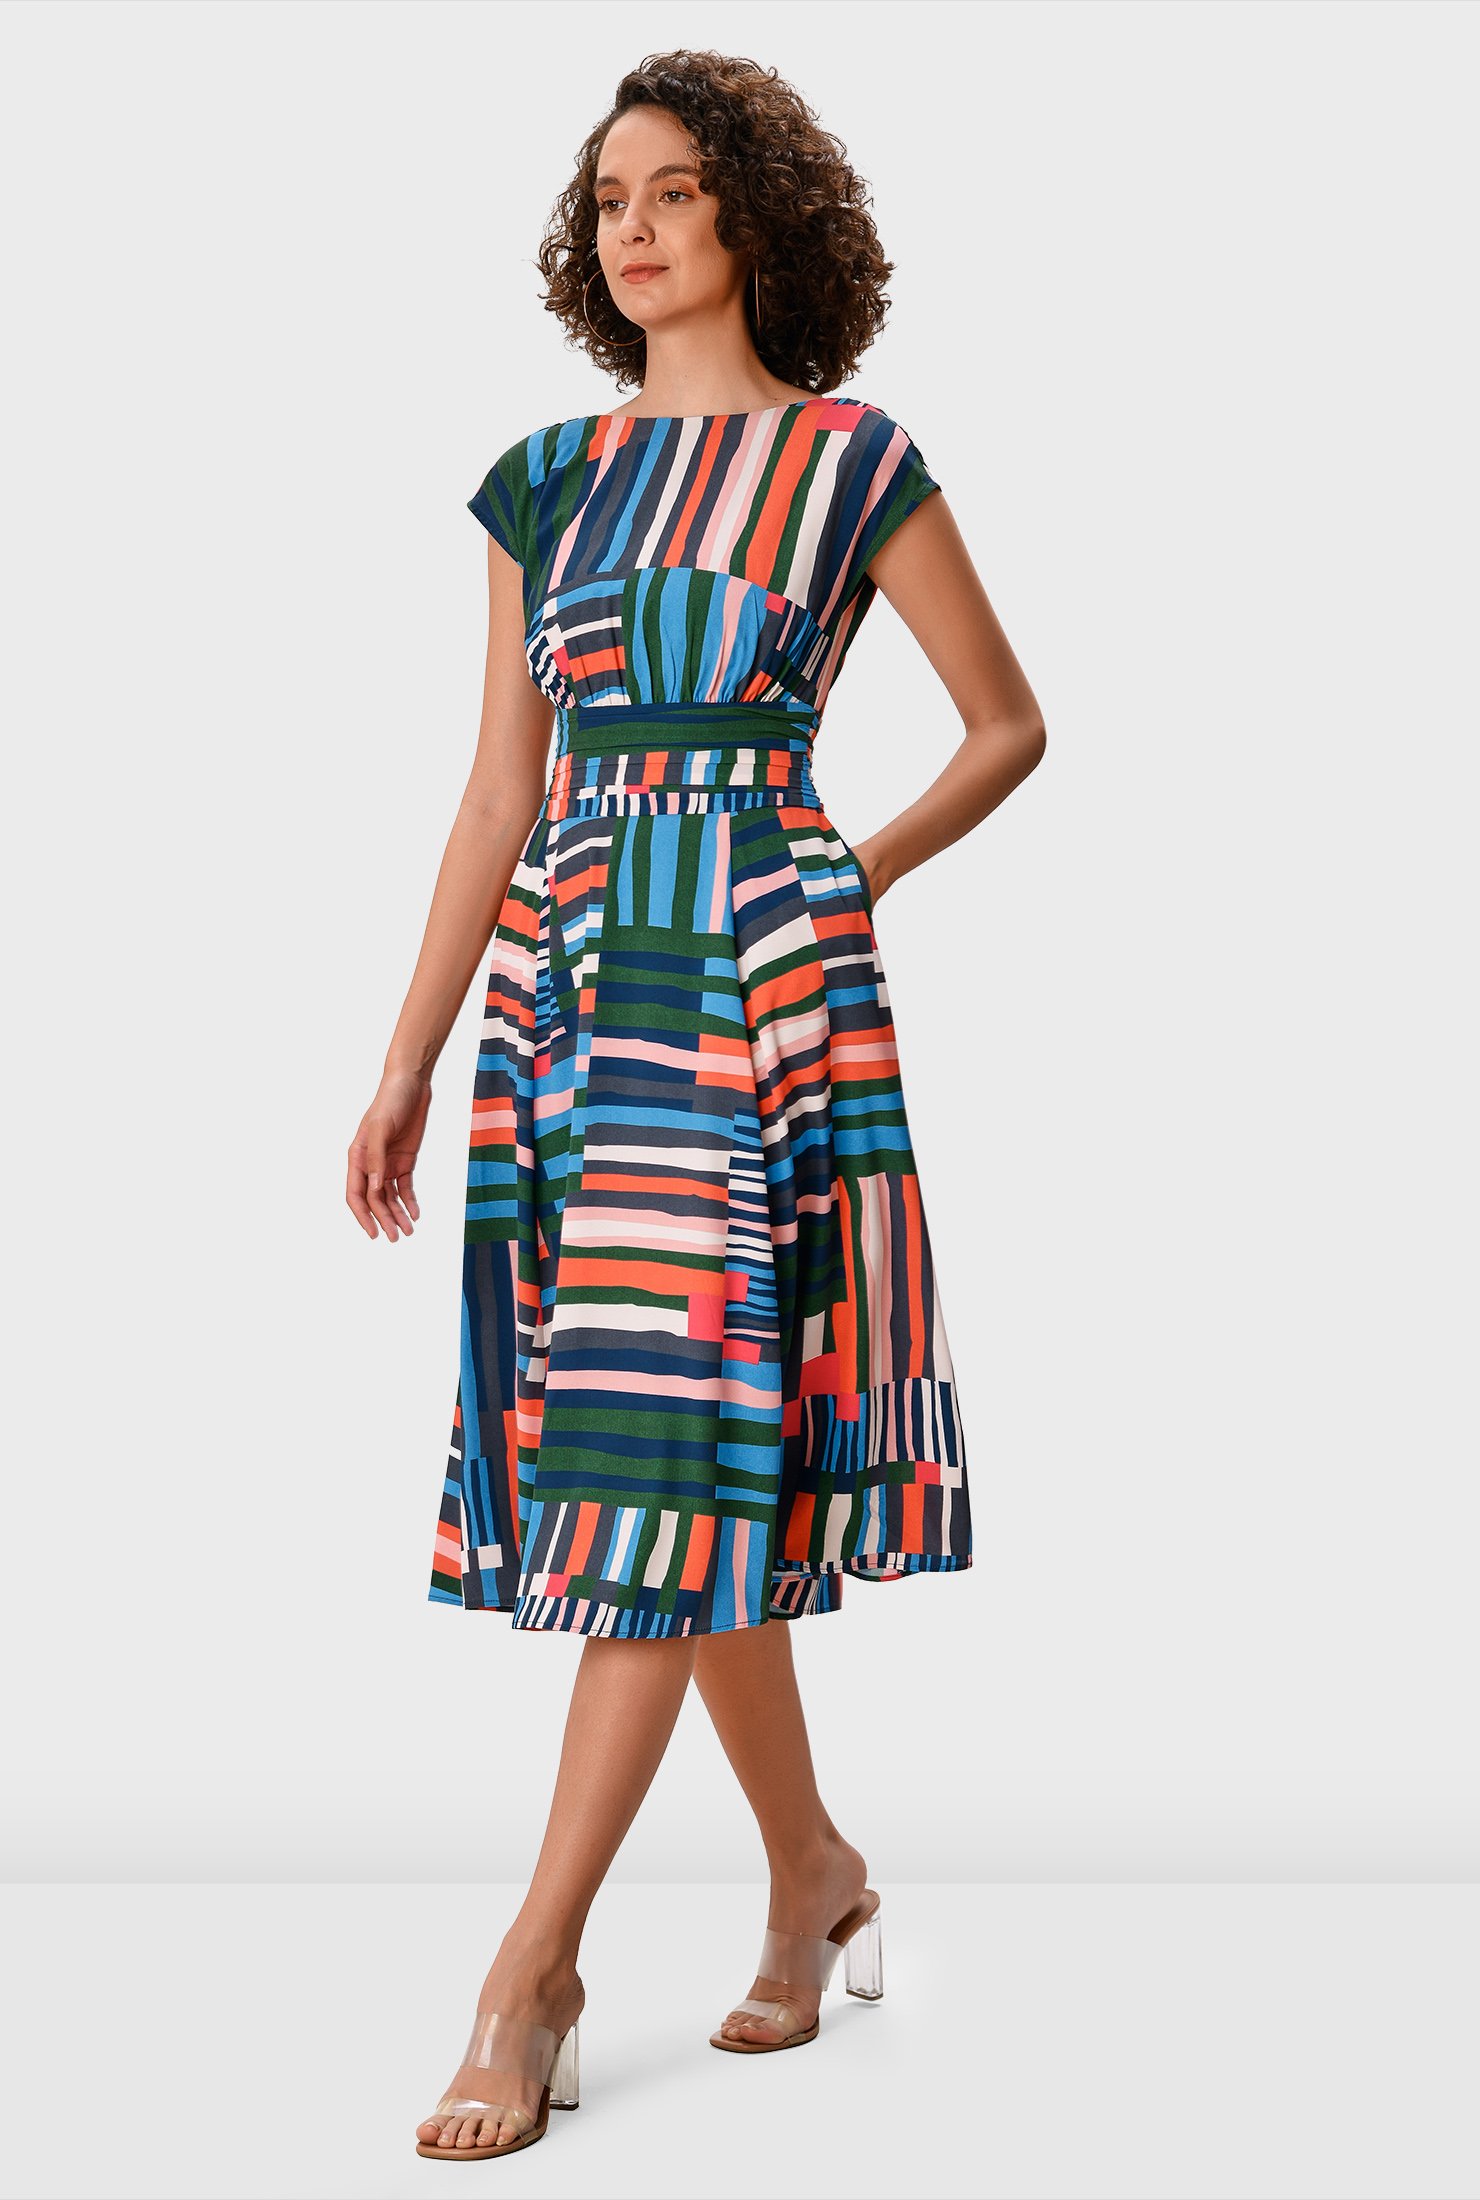 Shop Graphic stripe print crepe pleated empire dress | eShakti